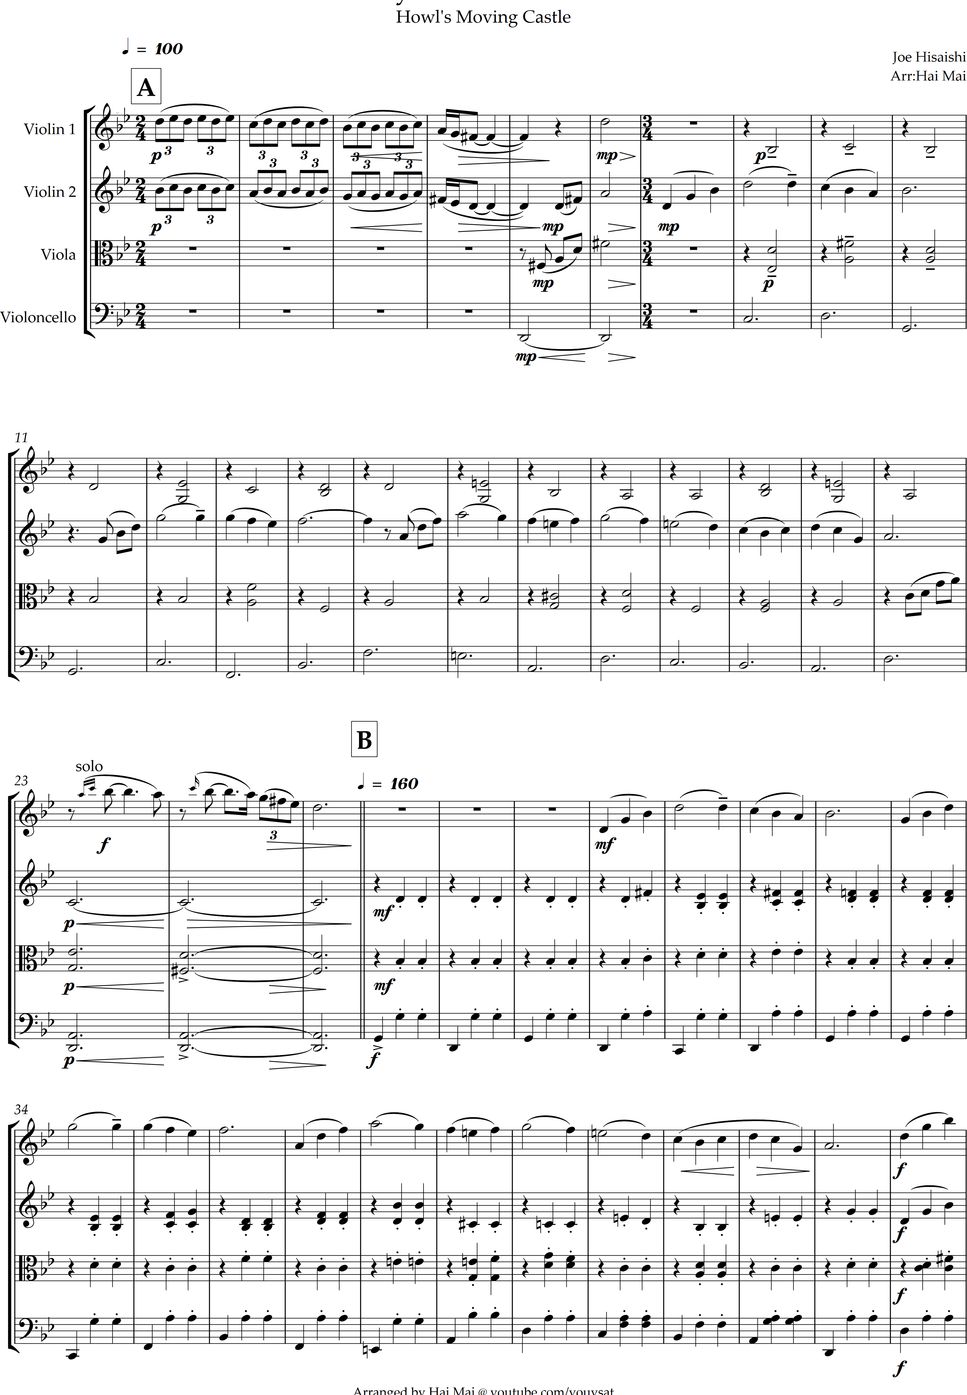 Joe Hisaishi - Merry Go Round of Life - String Quartet (Howl's Moving Castle) by Hai Mai